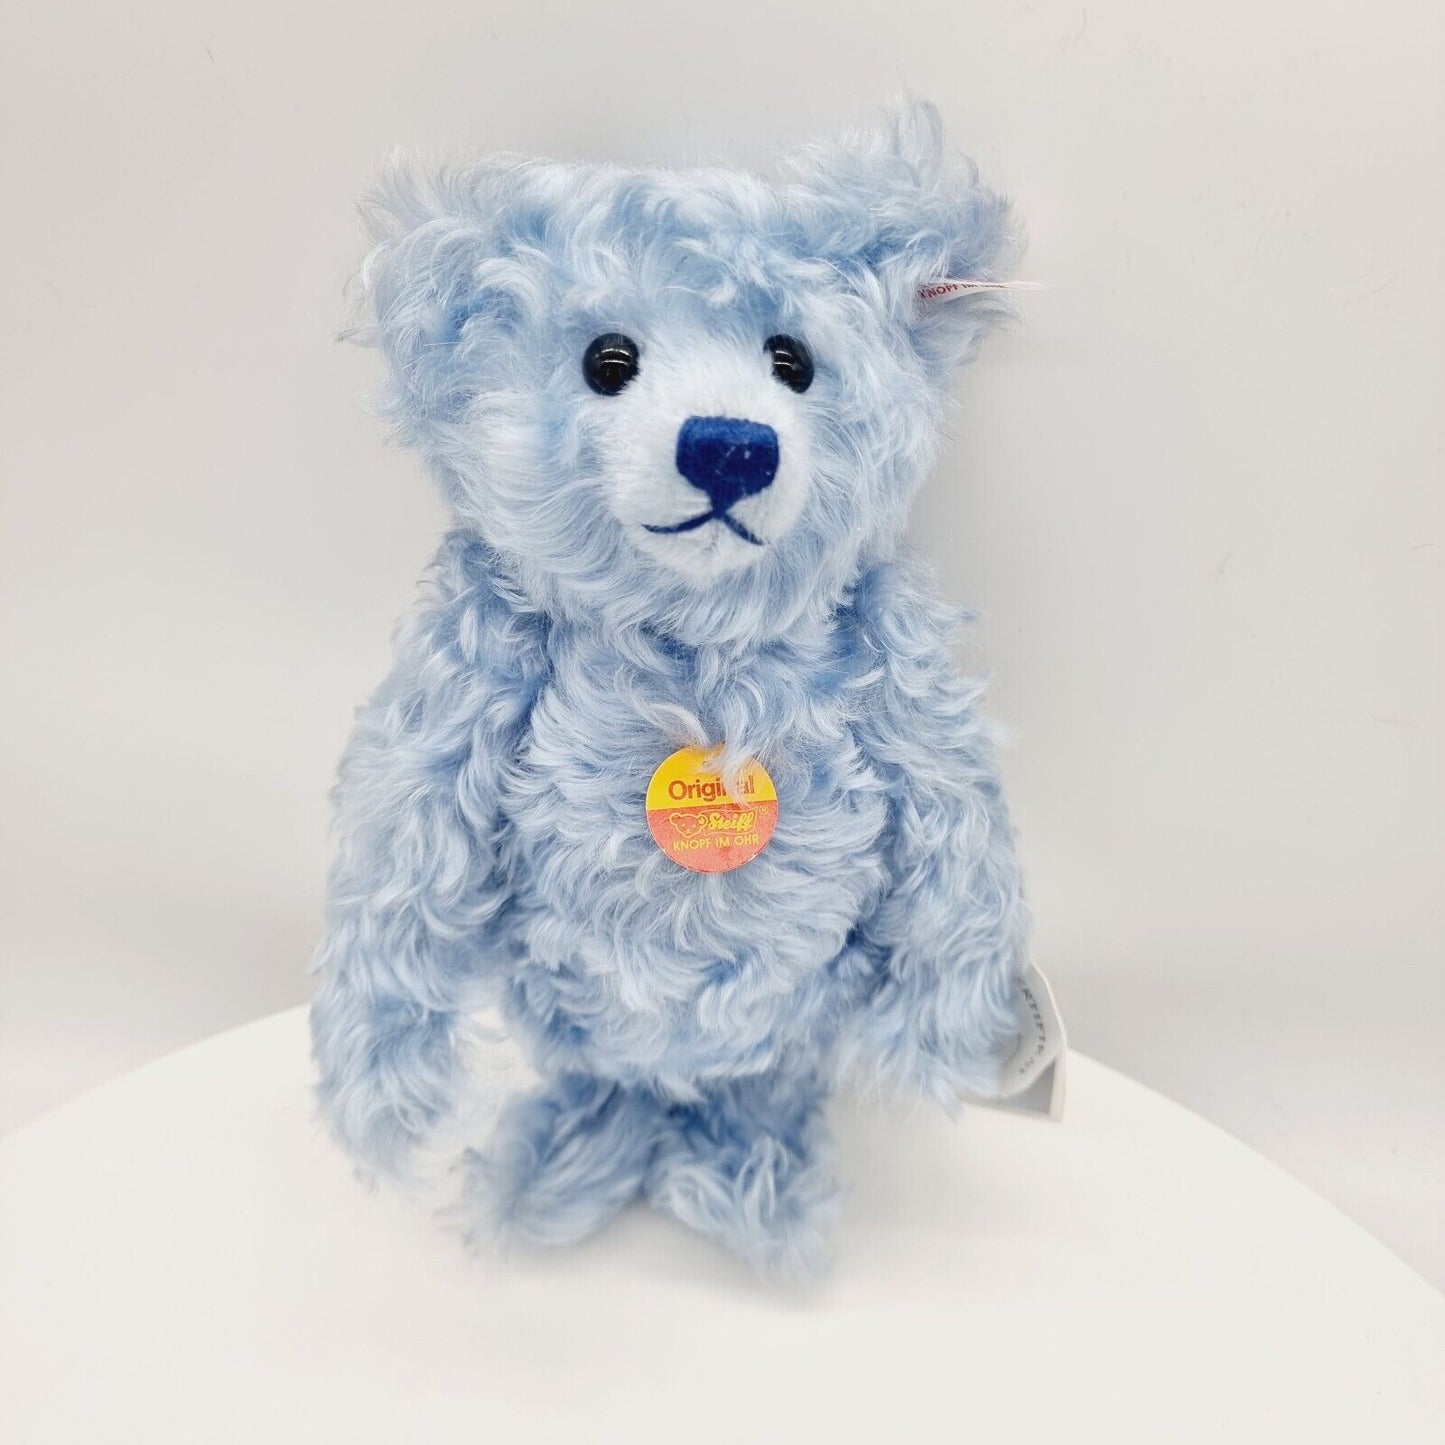 Steiff 670725 Teddybär Wasser Mohair hellblau 32 cm limitiert 2000 Jahr 2001